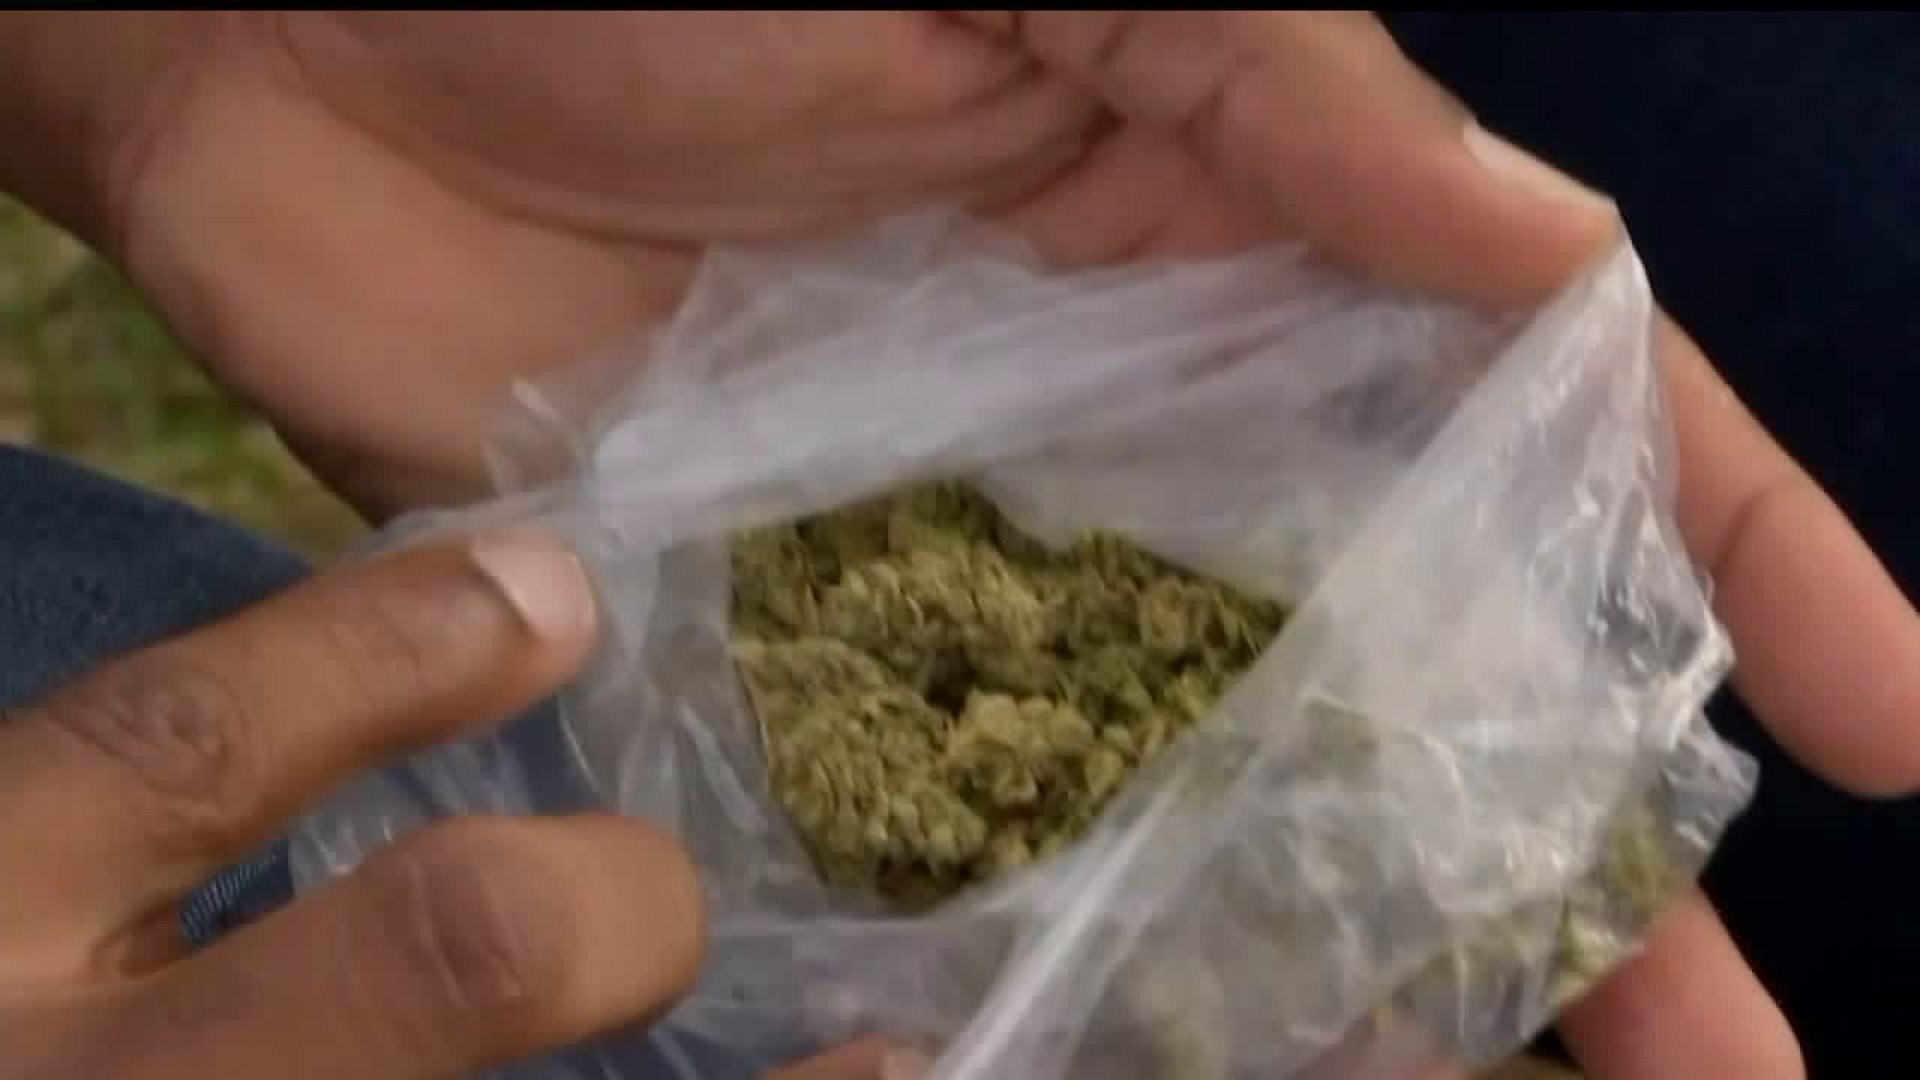 Lancaster considers reducing penalty for possessing small amounts of marijuana